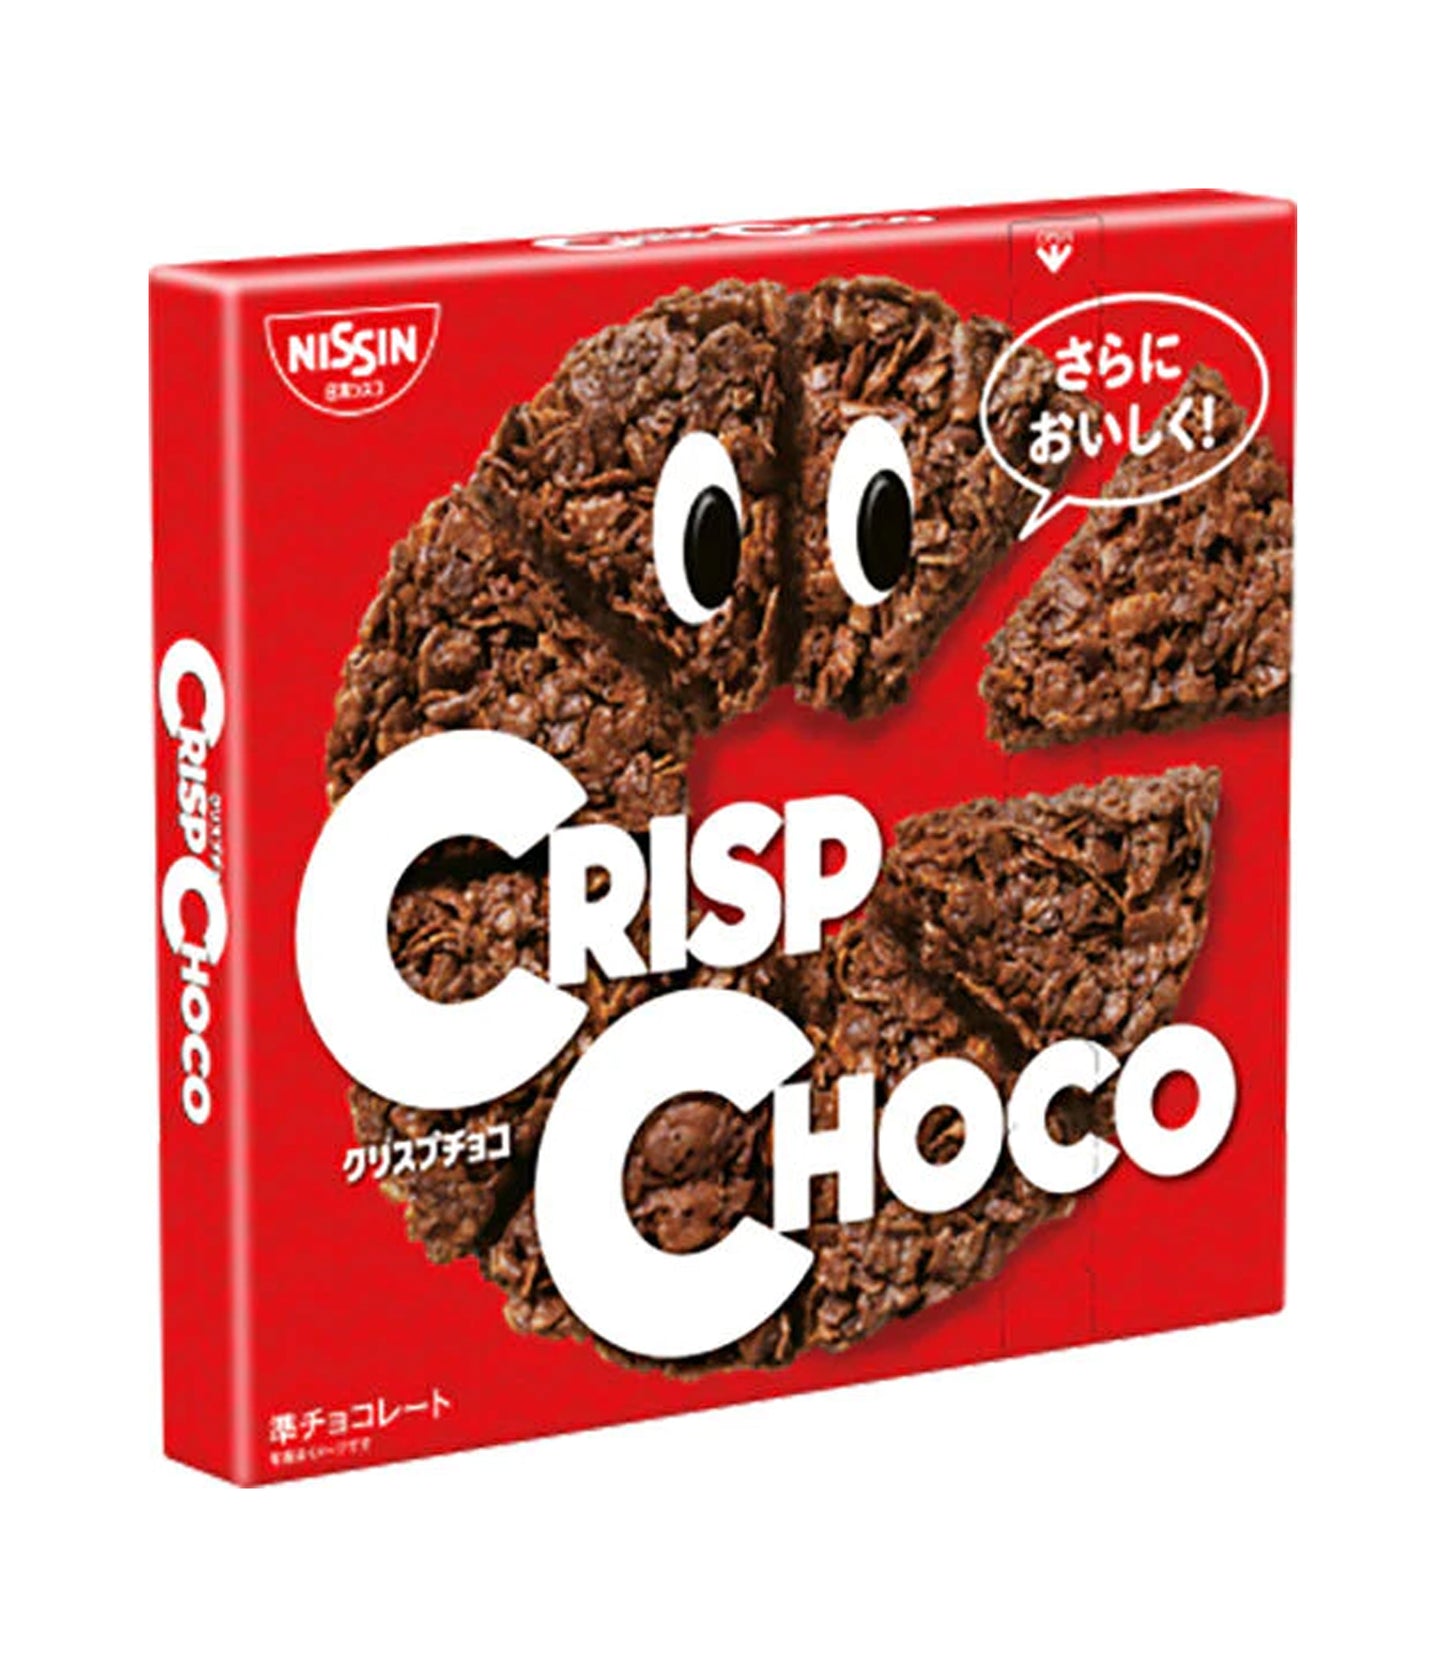 Nissin – Crisp Choco 60g